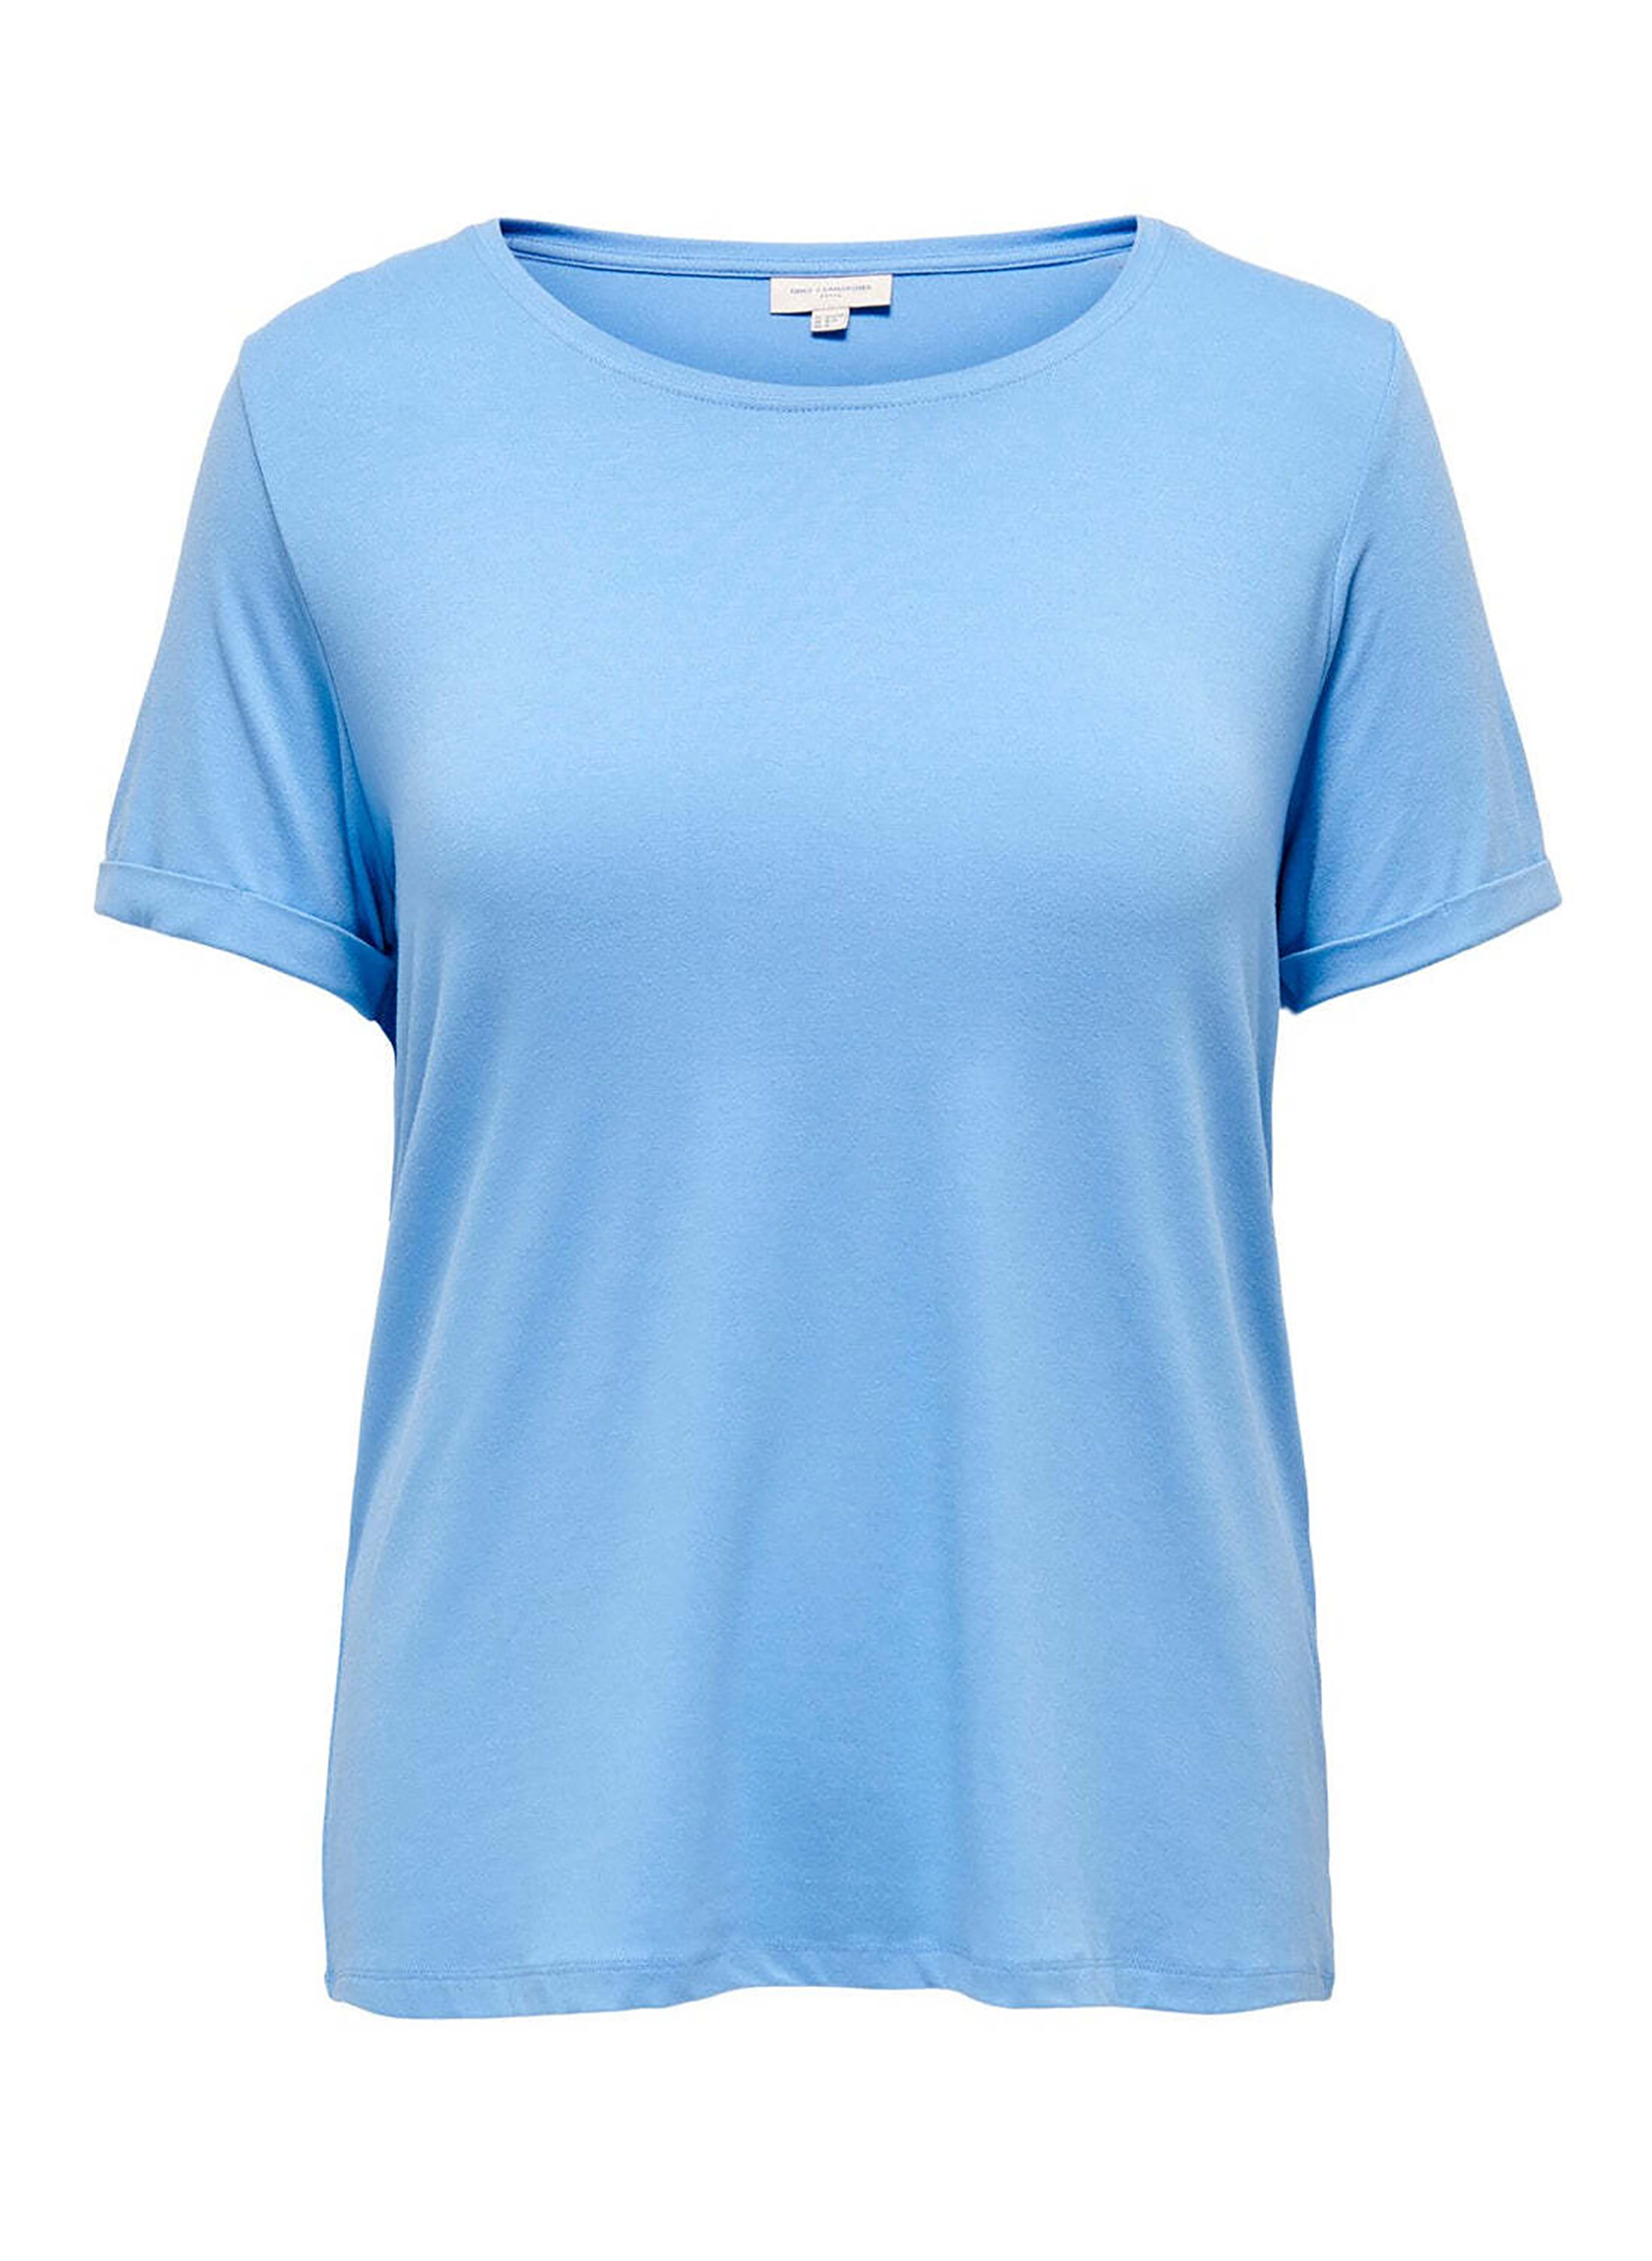 T-shirt με στρογγυλή λαιμόκοψη σε ένα υπέροχο θαλασσί χρώμα. Basic κομμάτι που θα σας συνοδεύσει σε καθημερινές δραστηριότητες ή βόλτες!